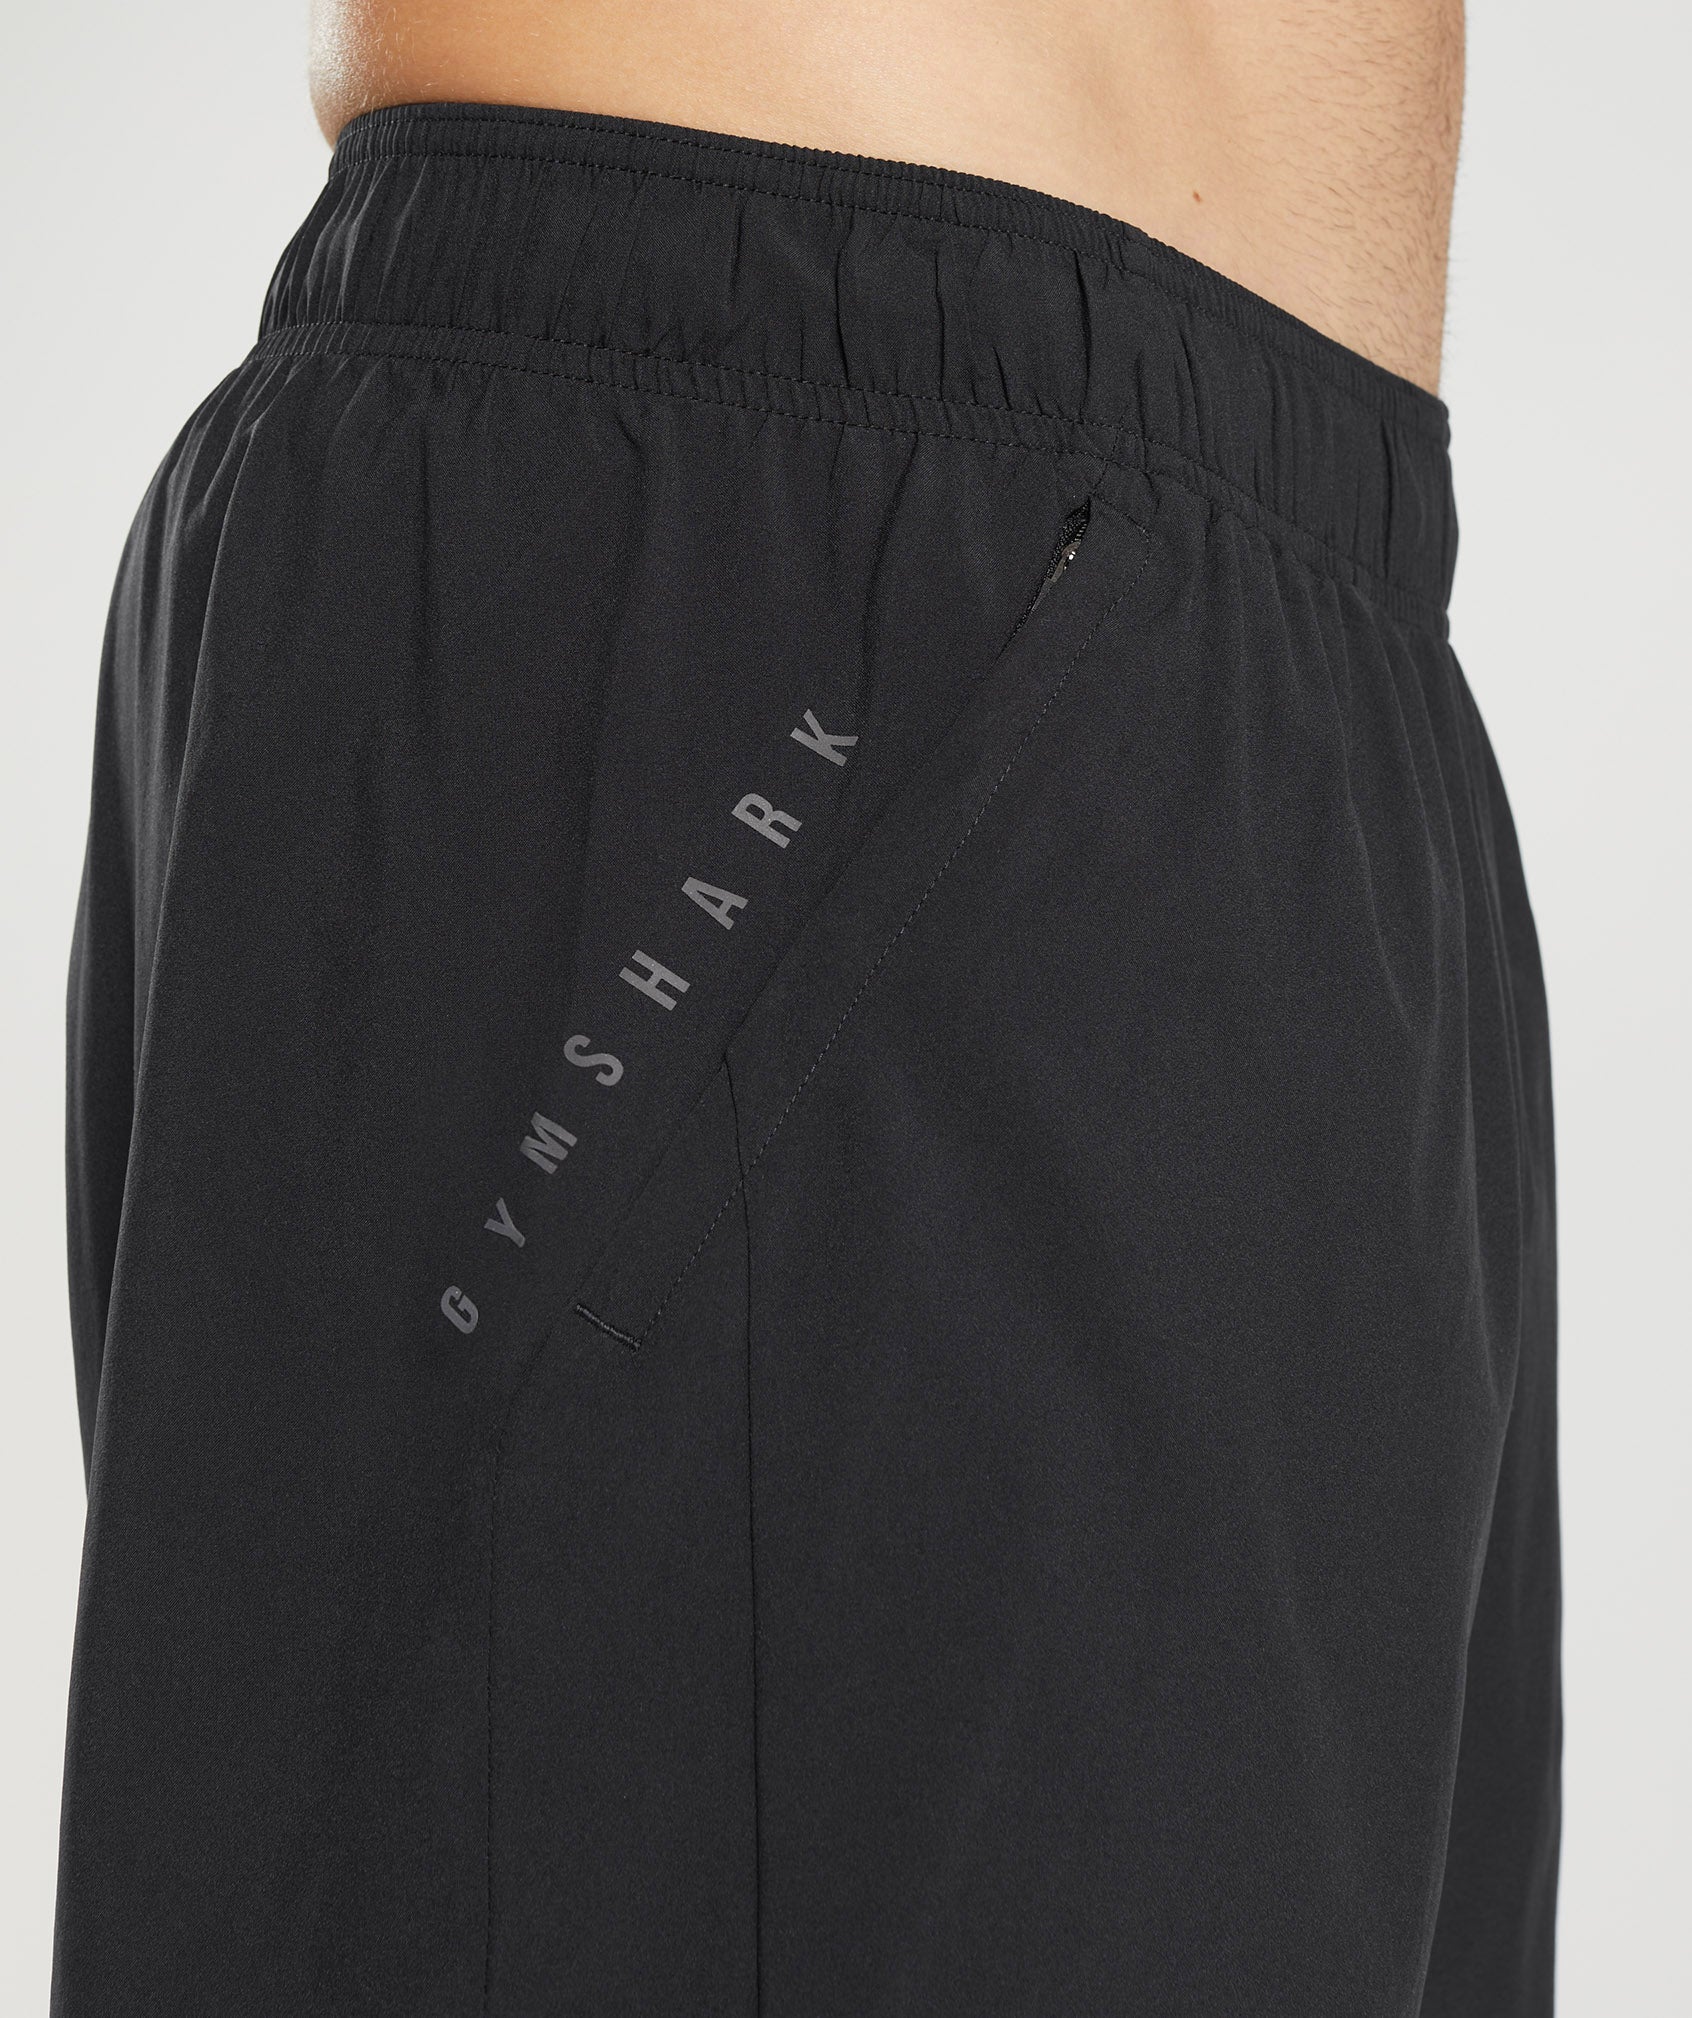 Gymshark Sport 5 2 In 1 Shorts - Silhouette Grey/Black